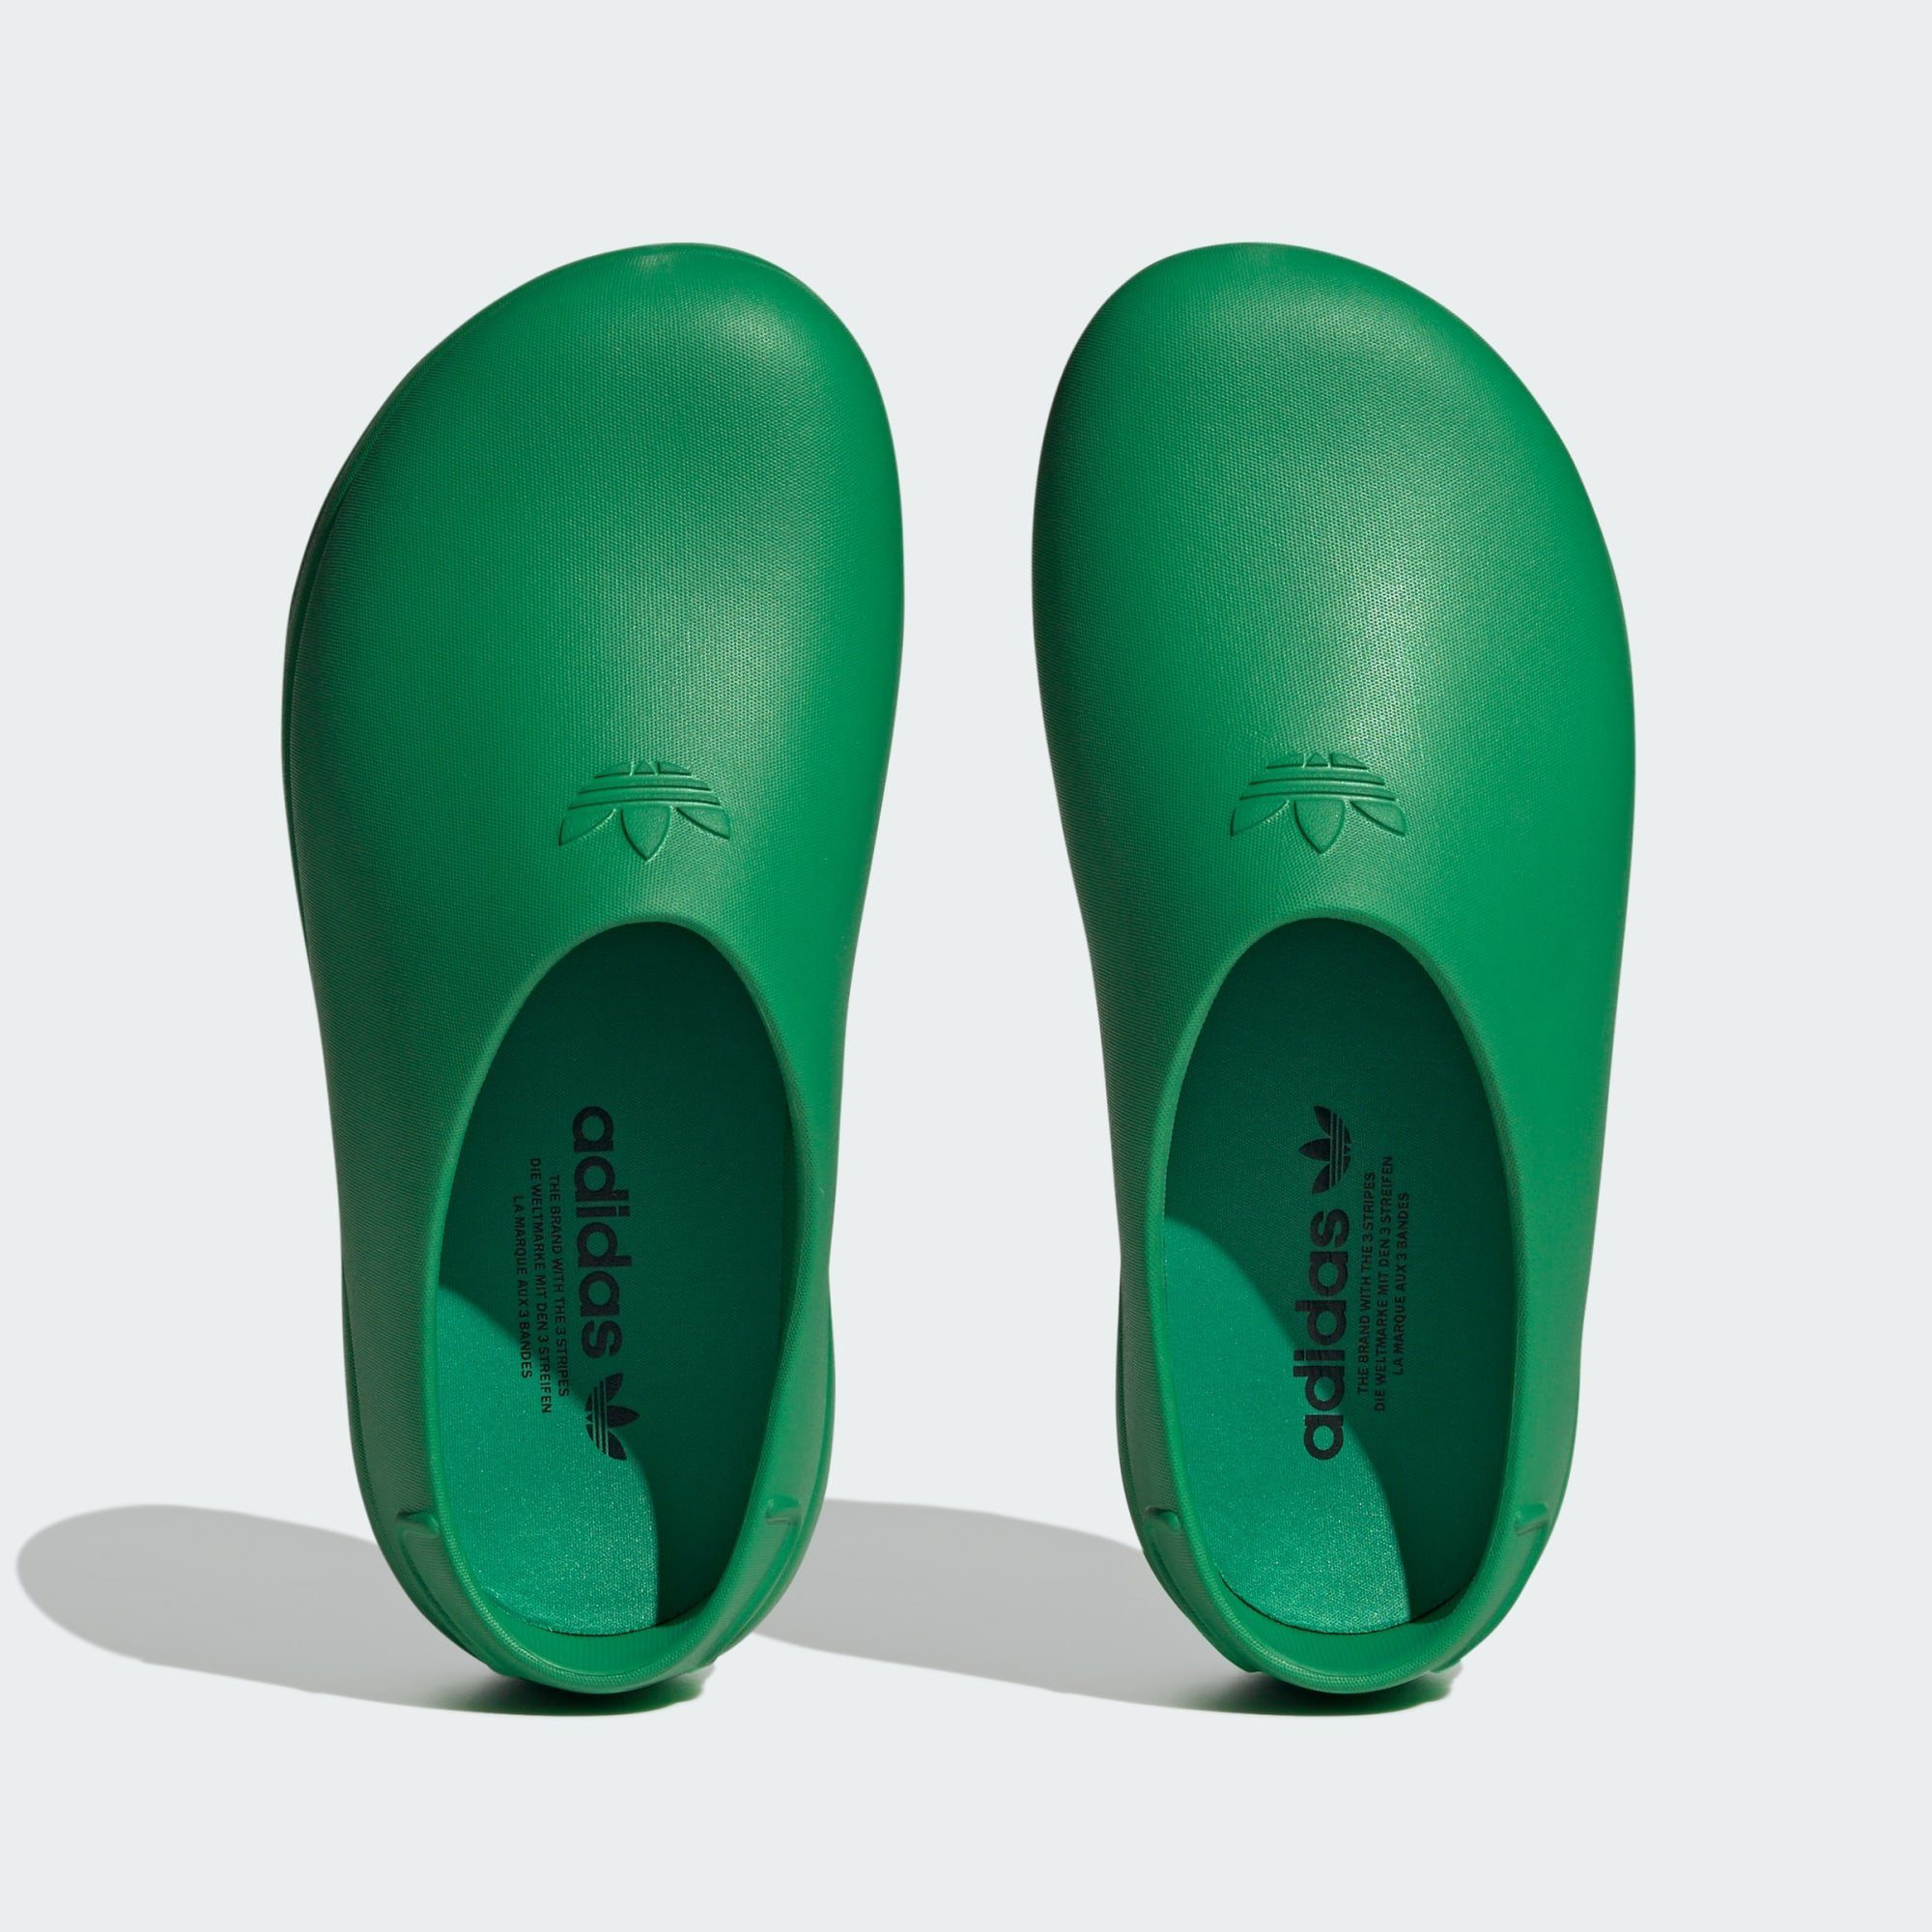 SMITH / ADIFOM STAN / adidas Core Green MULE Slipper Black Green Originals